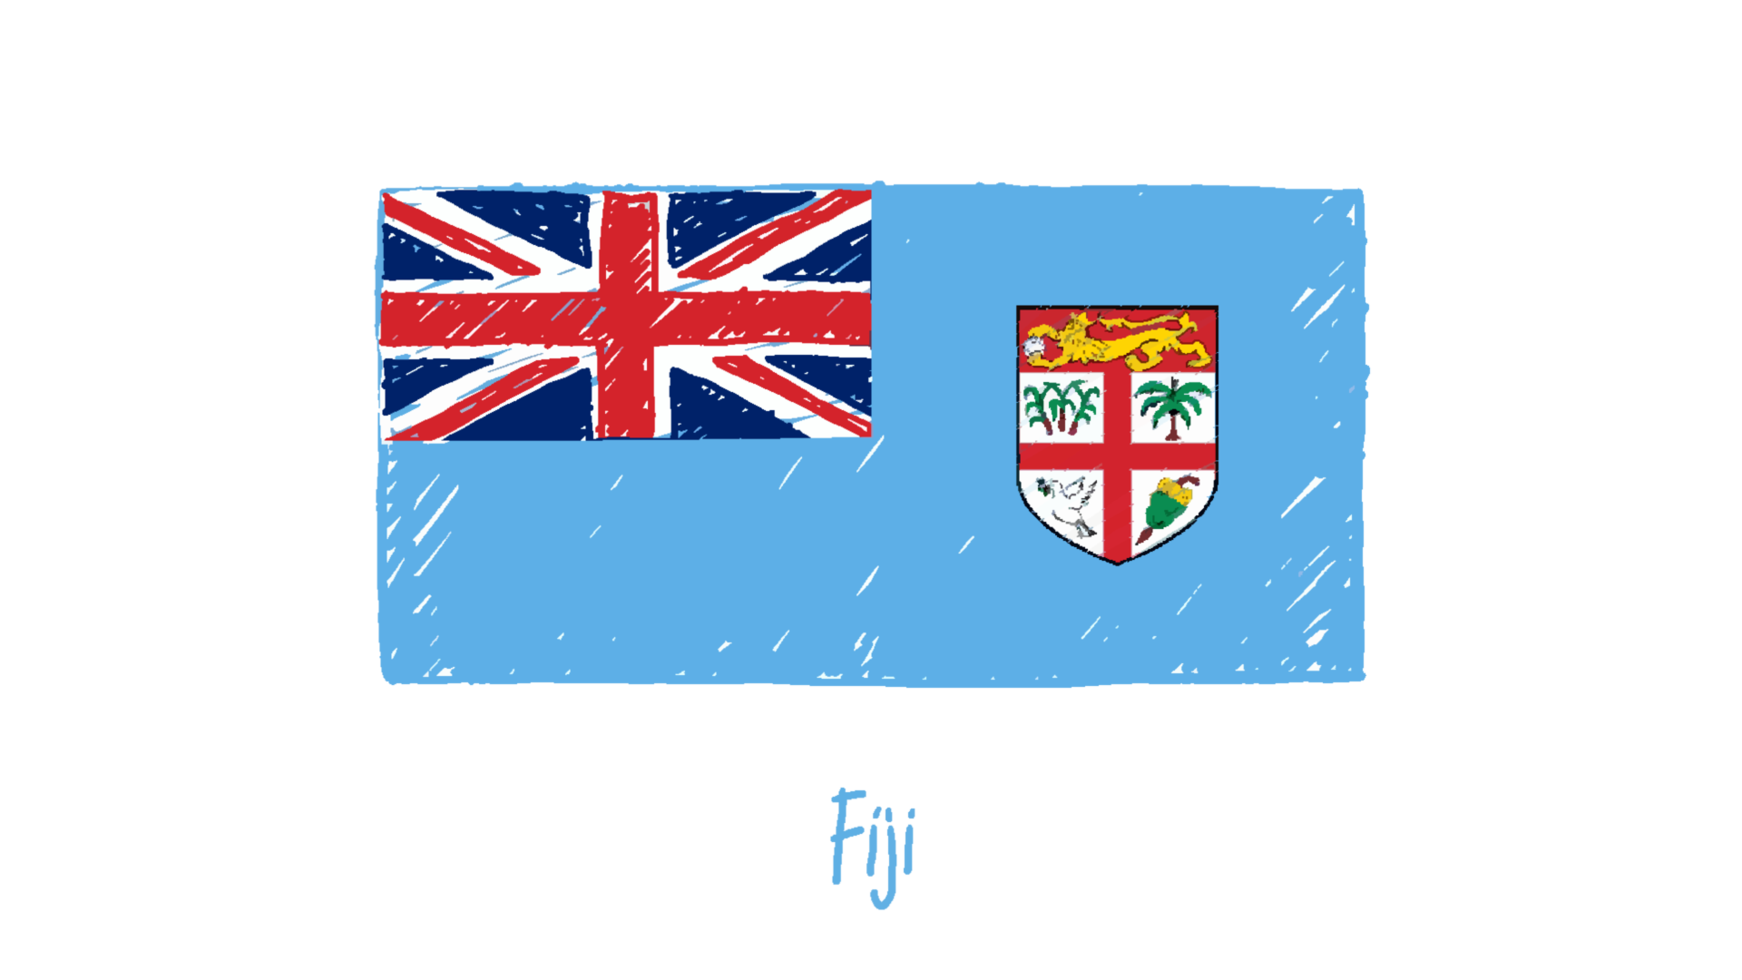 Fiji National Flag Pencil Color Sketch with Transparent Background png